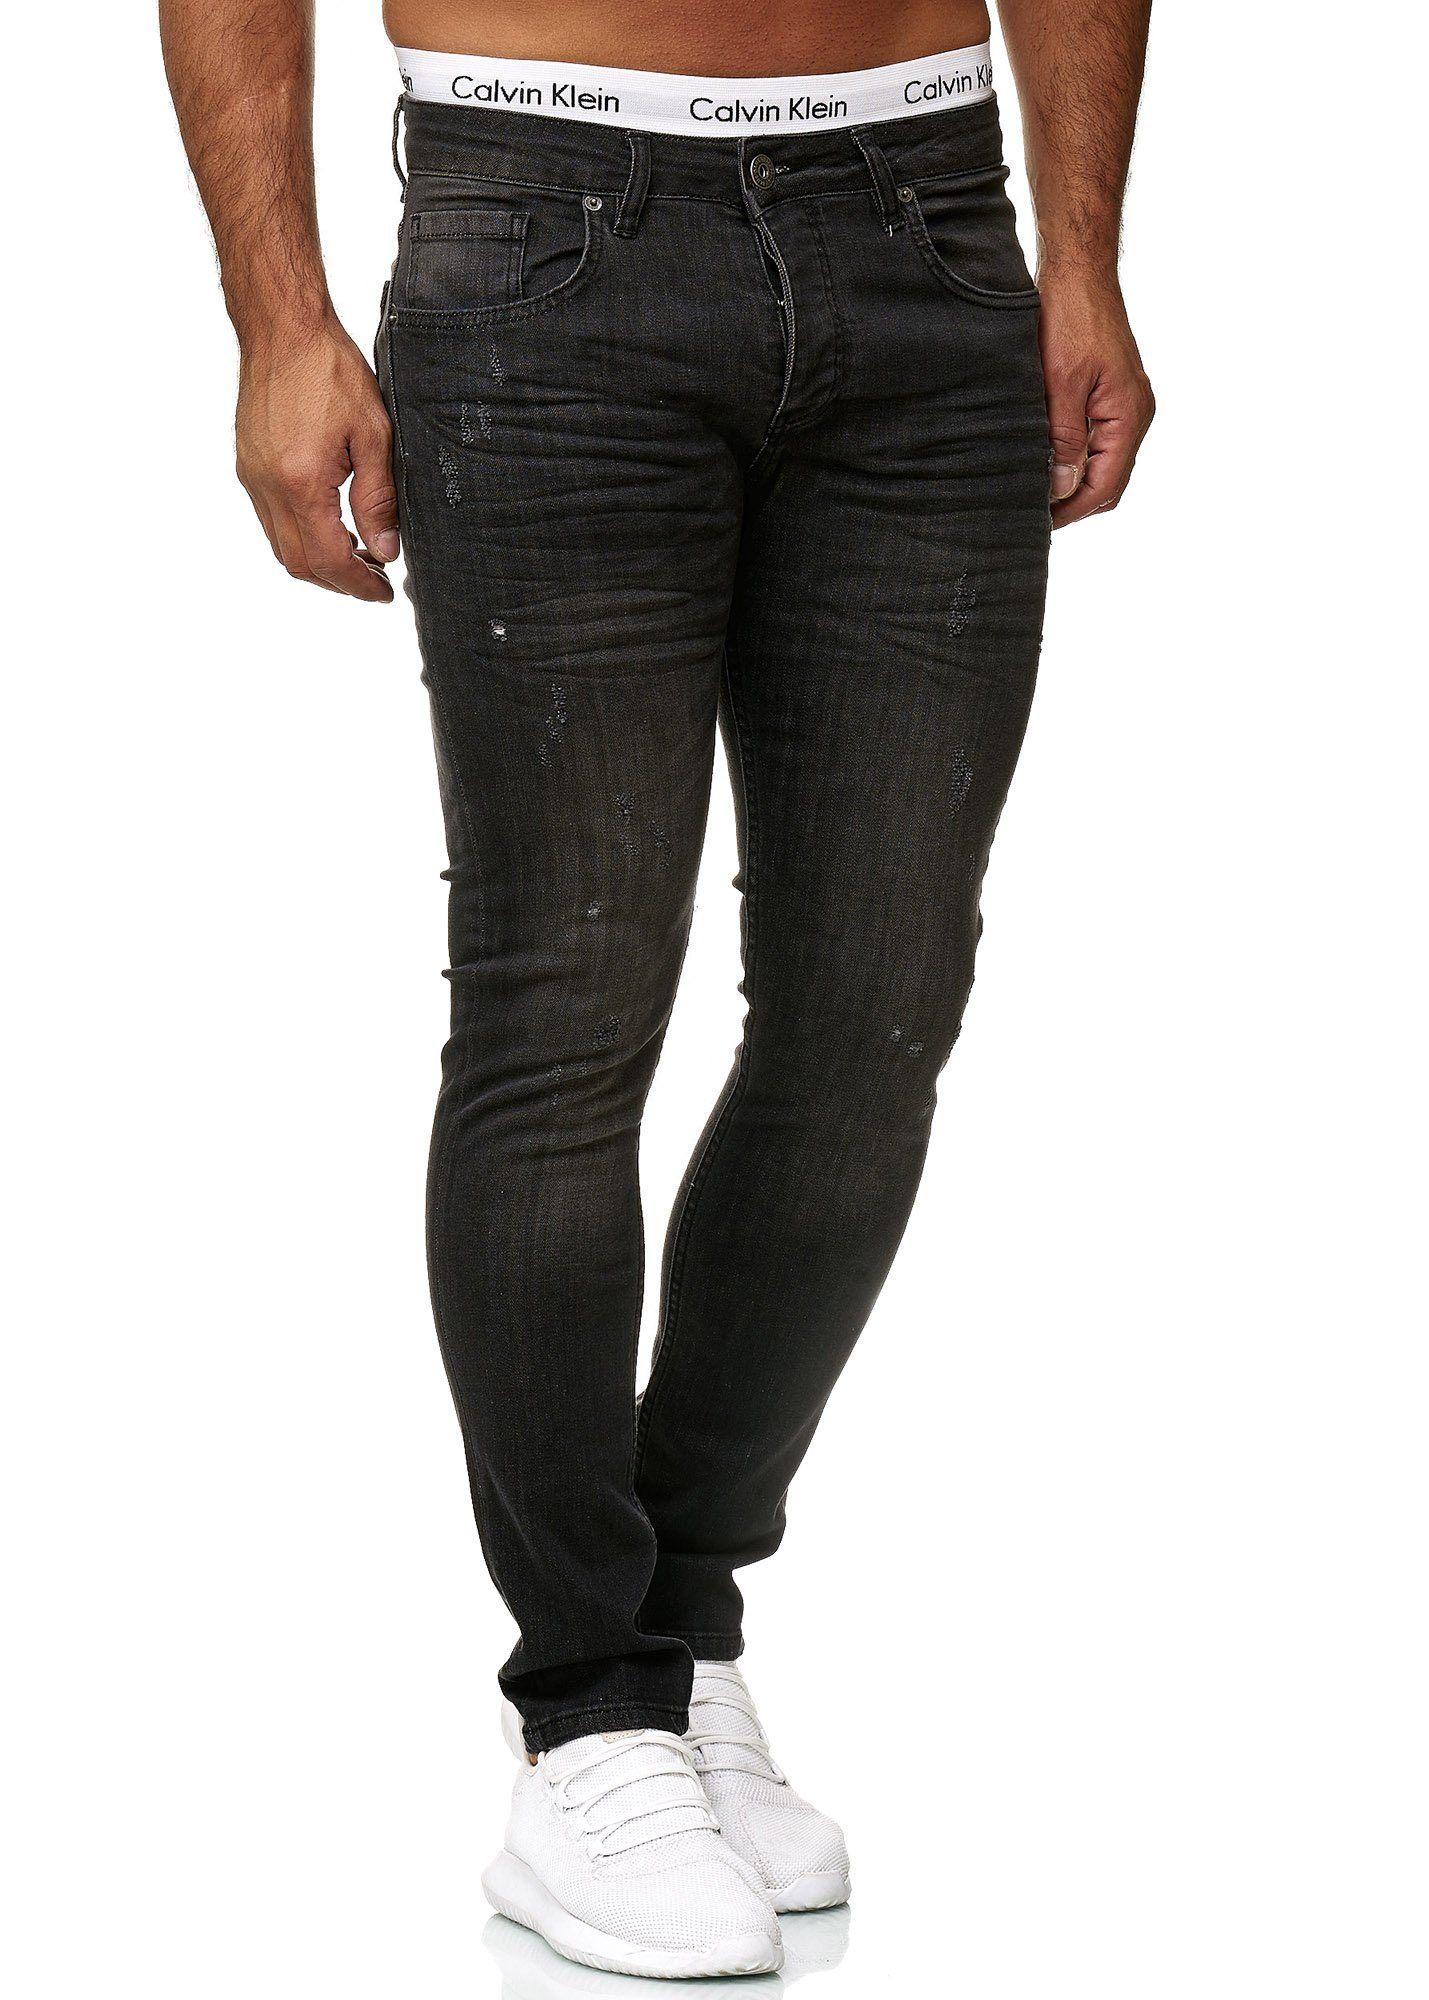 OneRedox Straight-Jeans Herren Jeans Hose Slim Fit Männer Skinny Denim